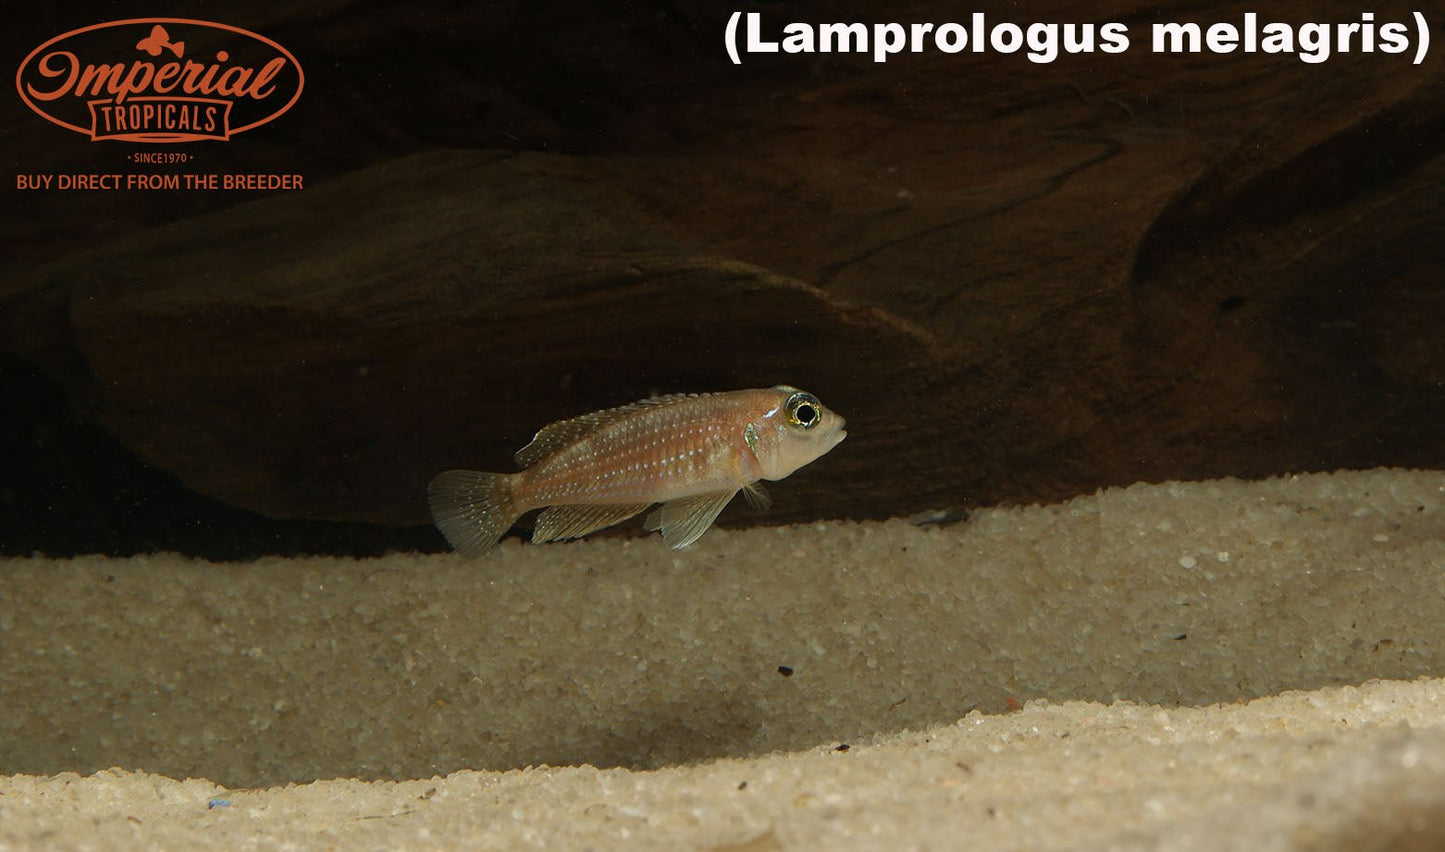 Lamprologus meleagris